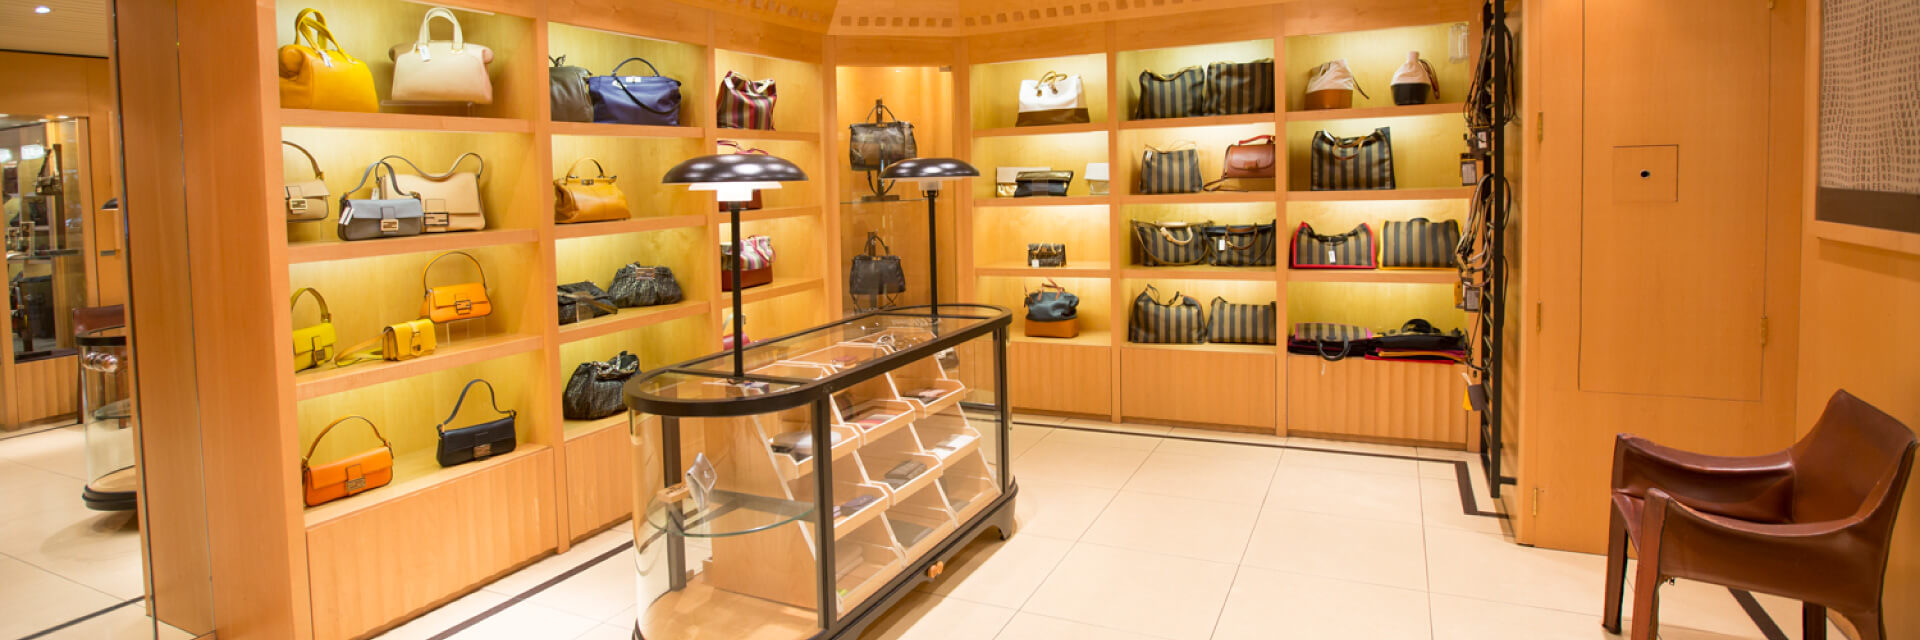 Kirk Freeport Leather page banner several designer purses and handbags